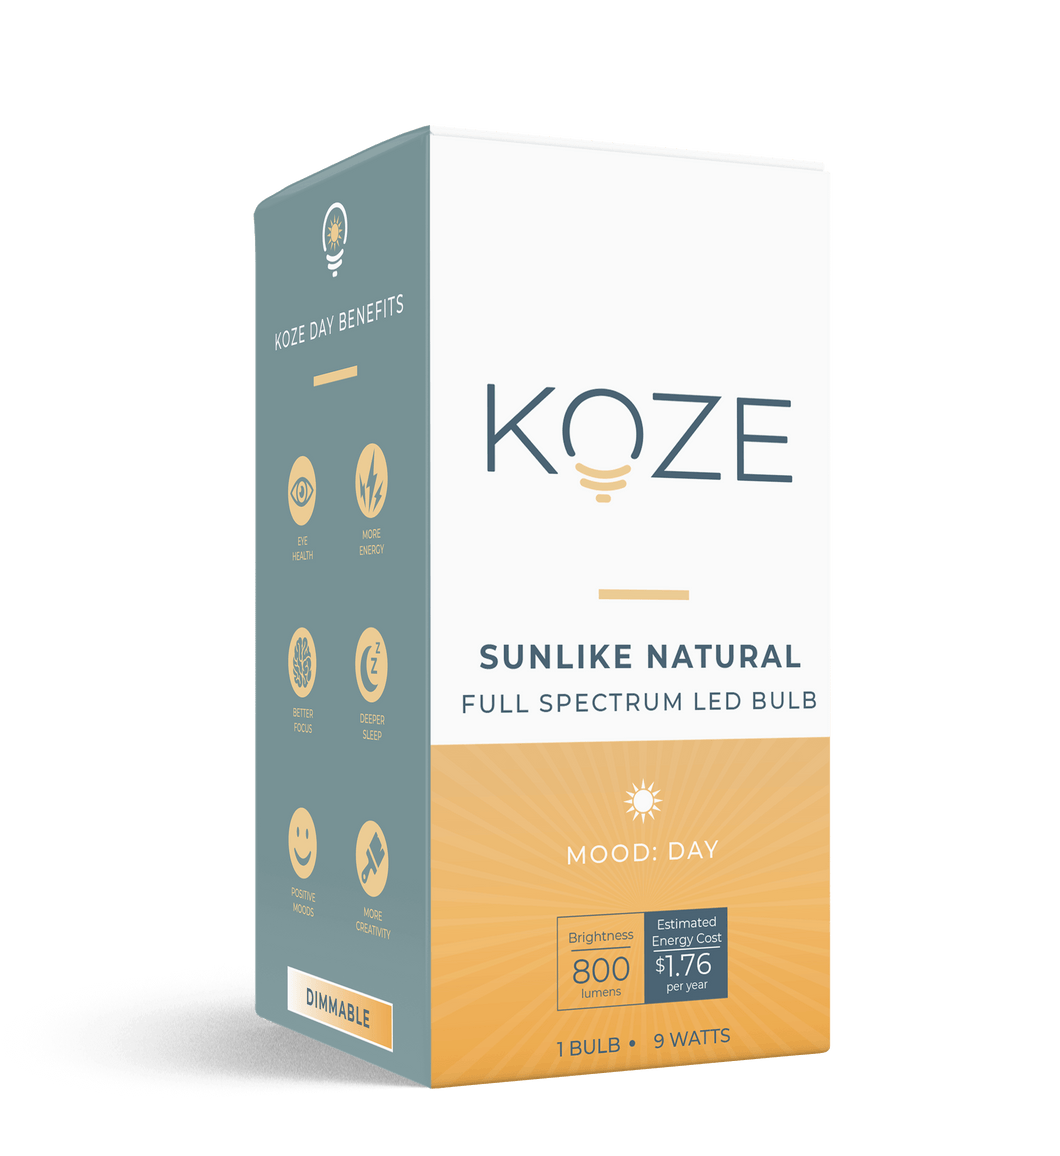 KOZE Full Spectrum LED Bulb packaging highlighting dimmable SunLike technology for natural light without UV.